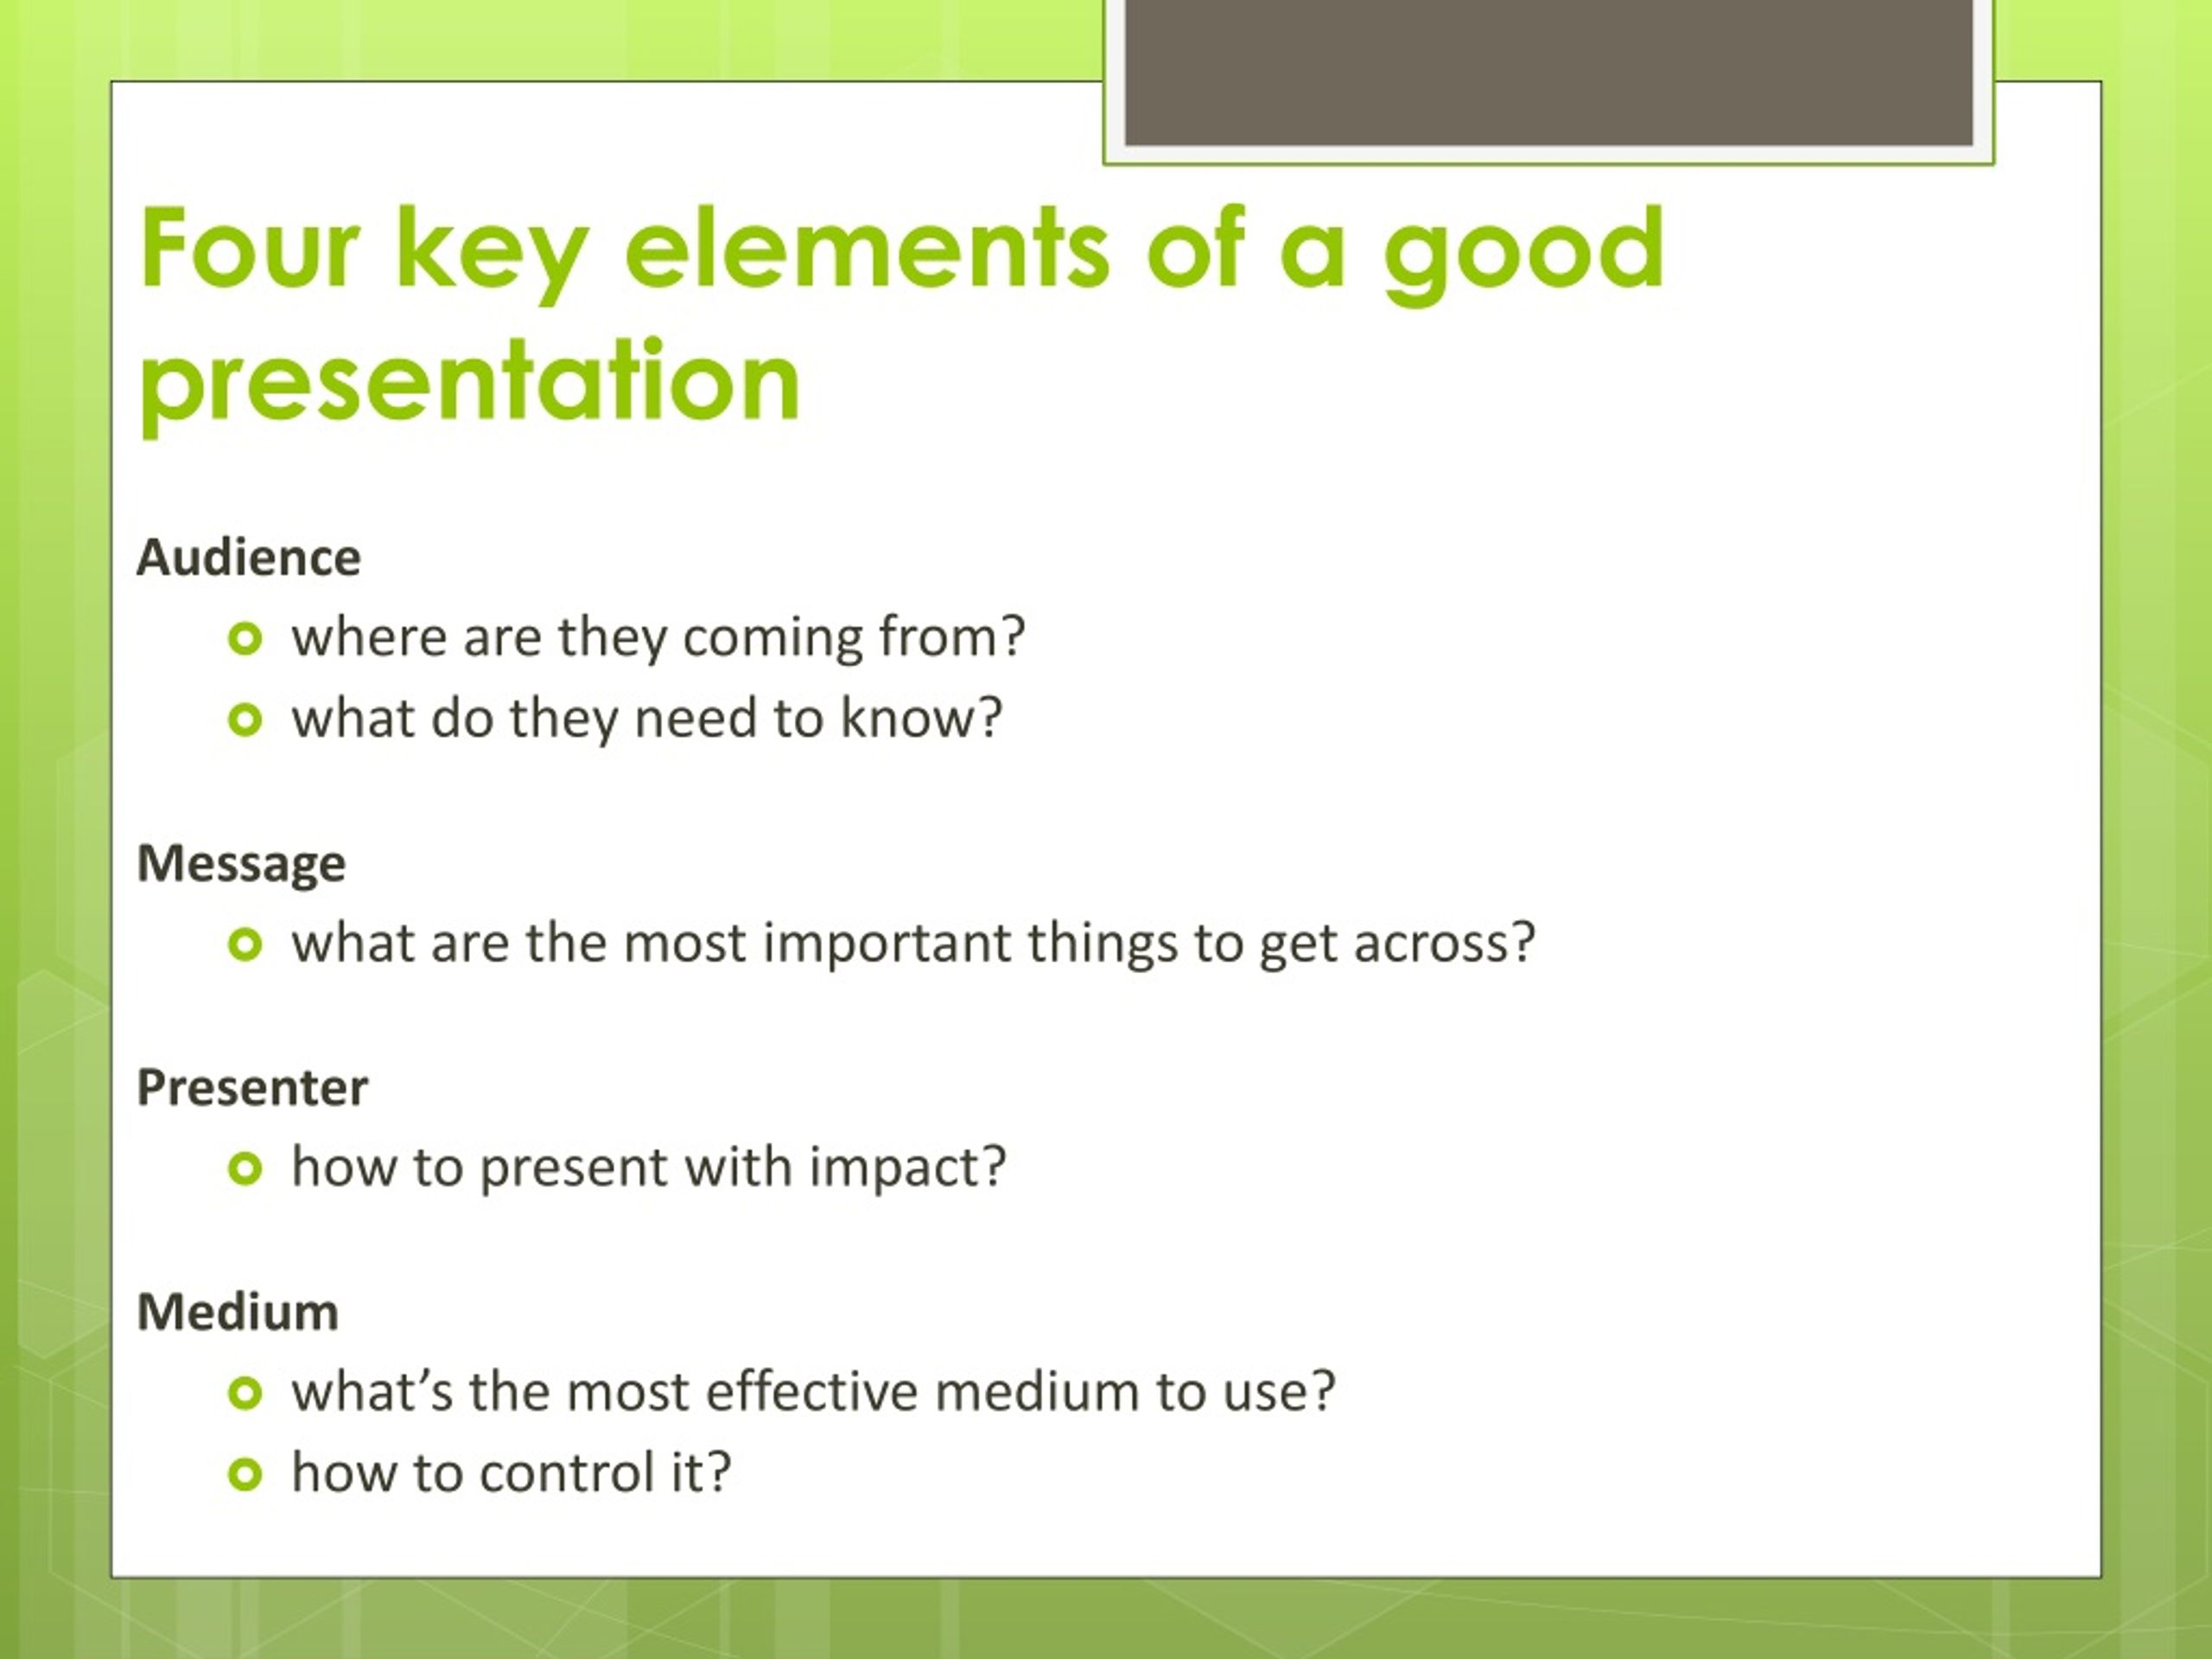 define elements of good presentation